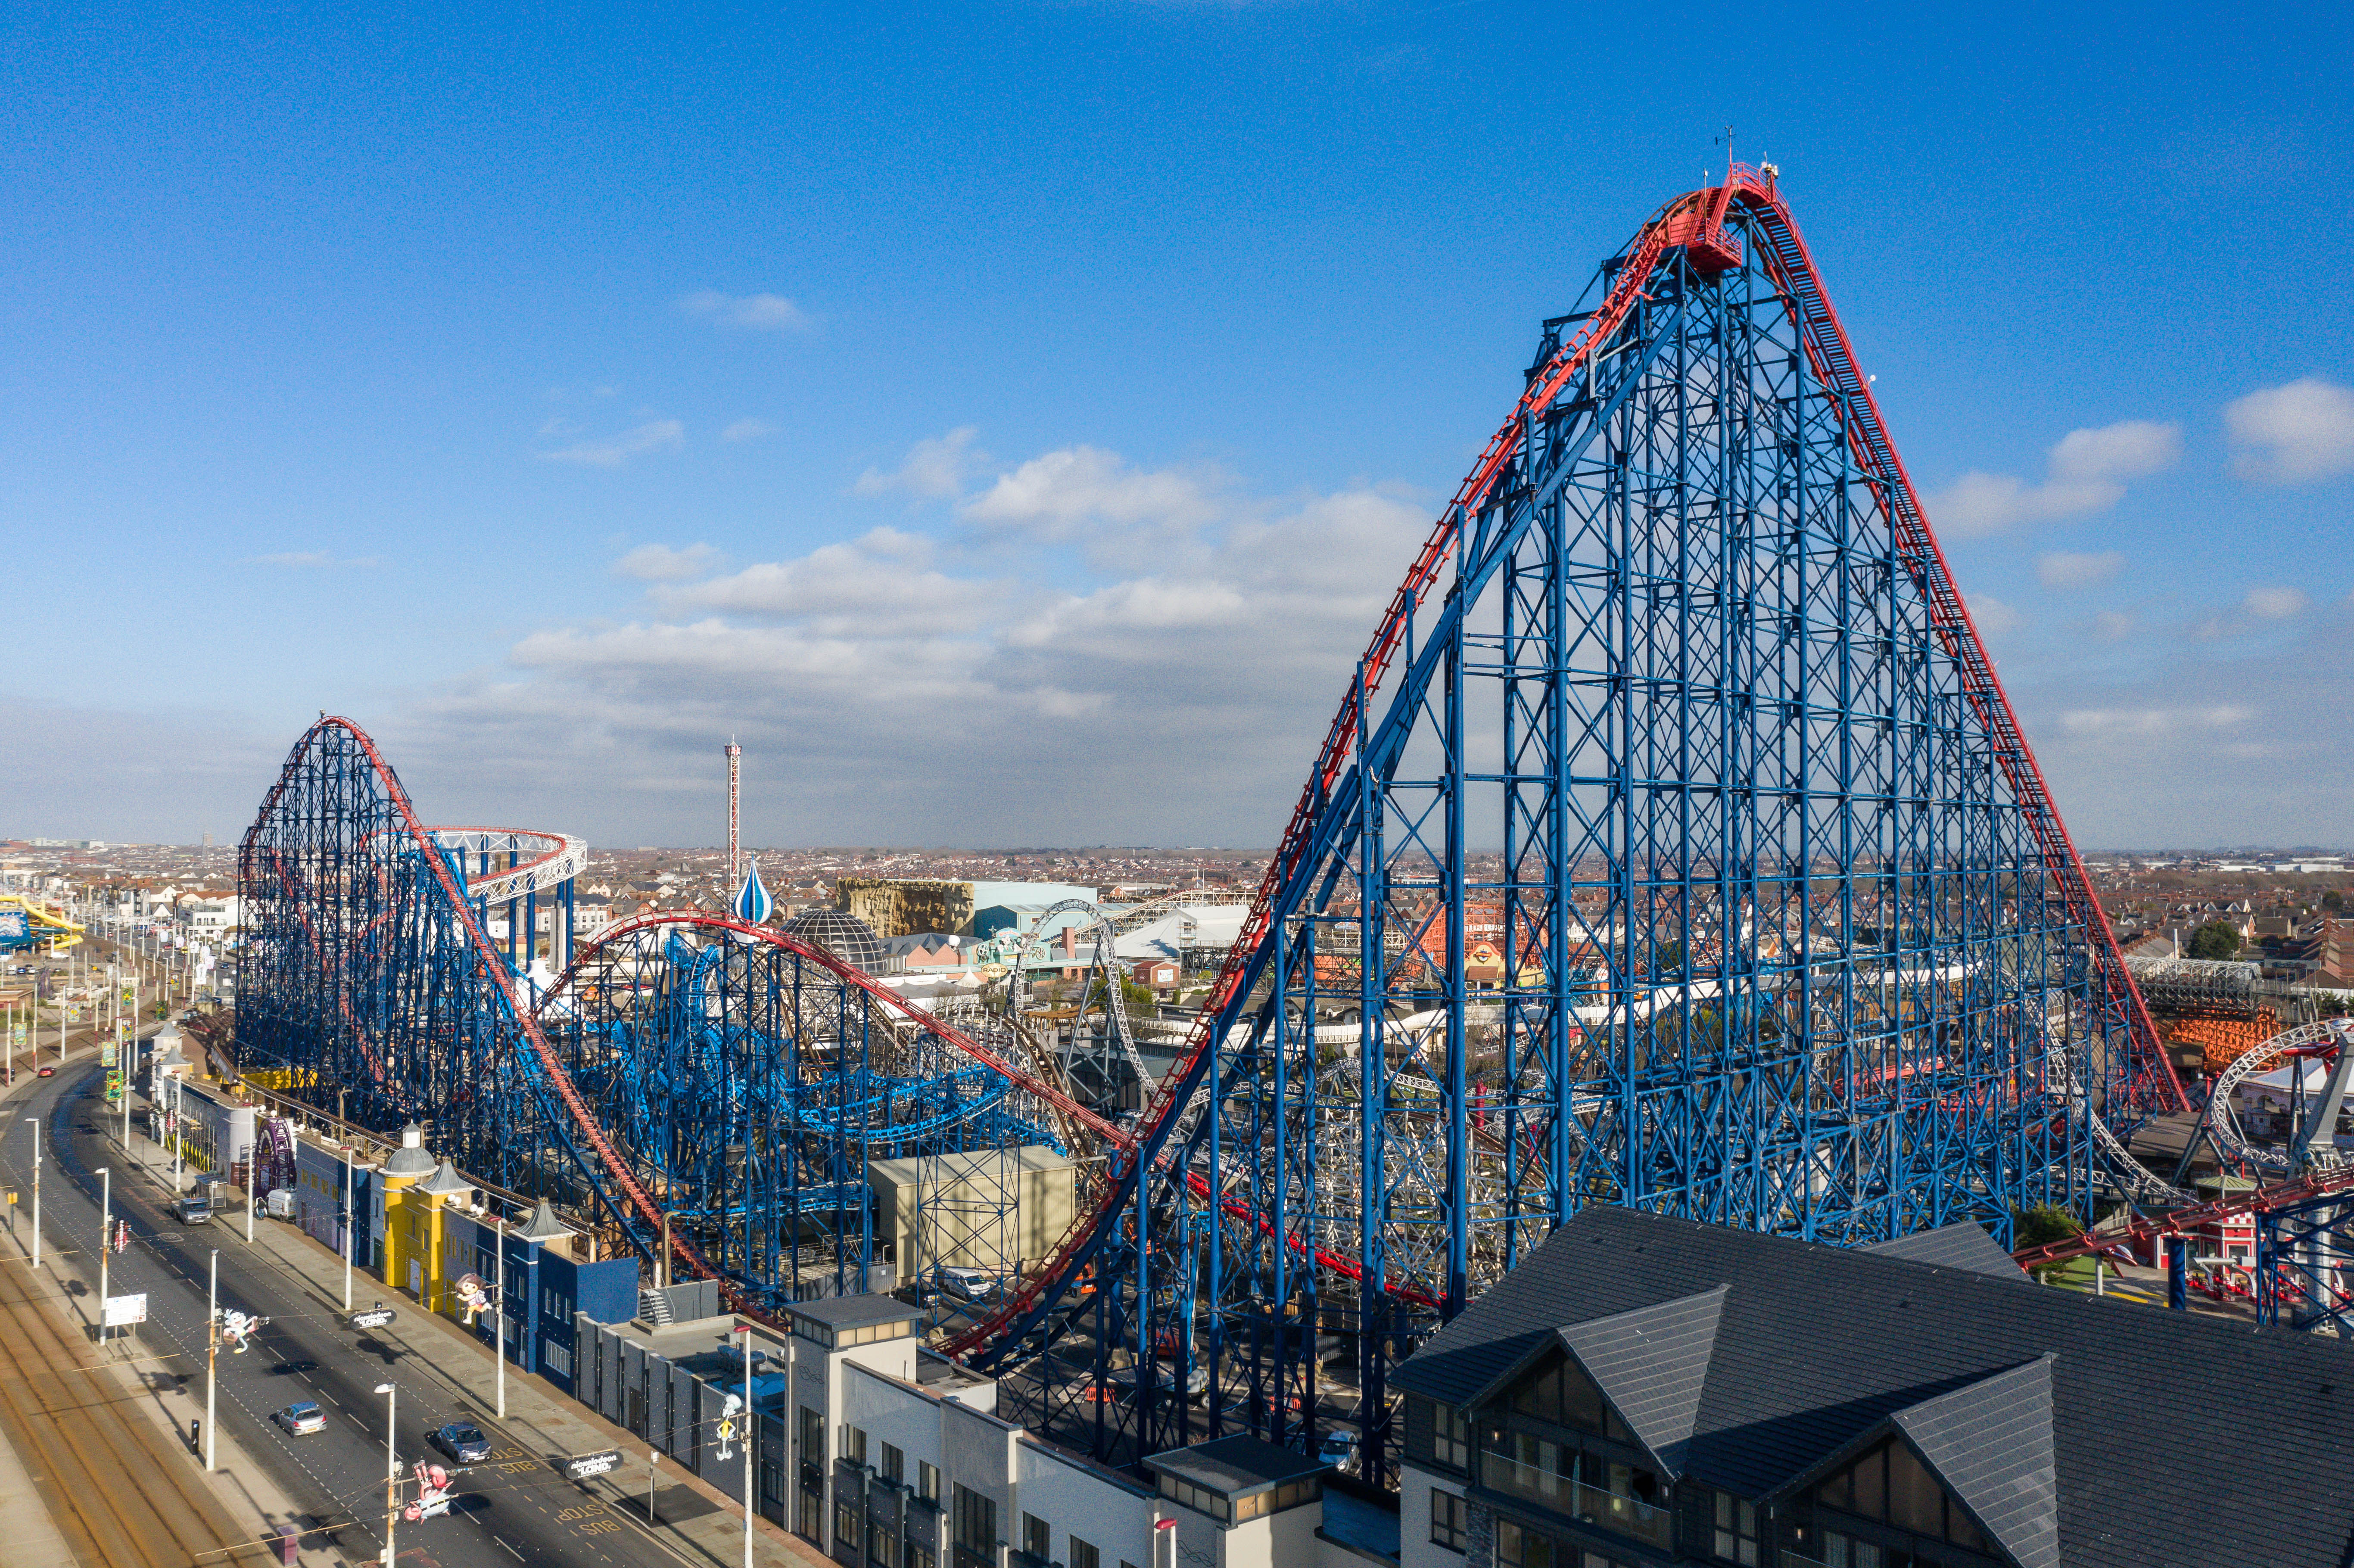 The Big One rollercoaster at Blackpool Pleasure Beach.